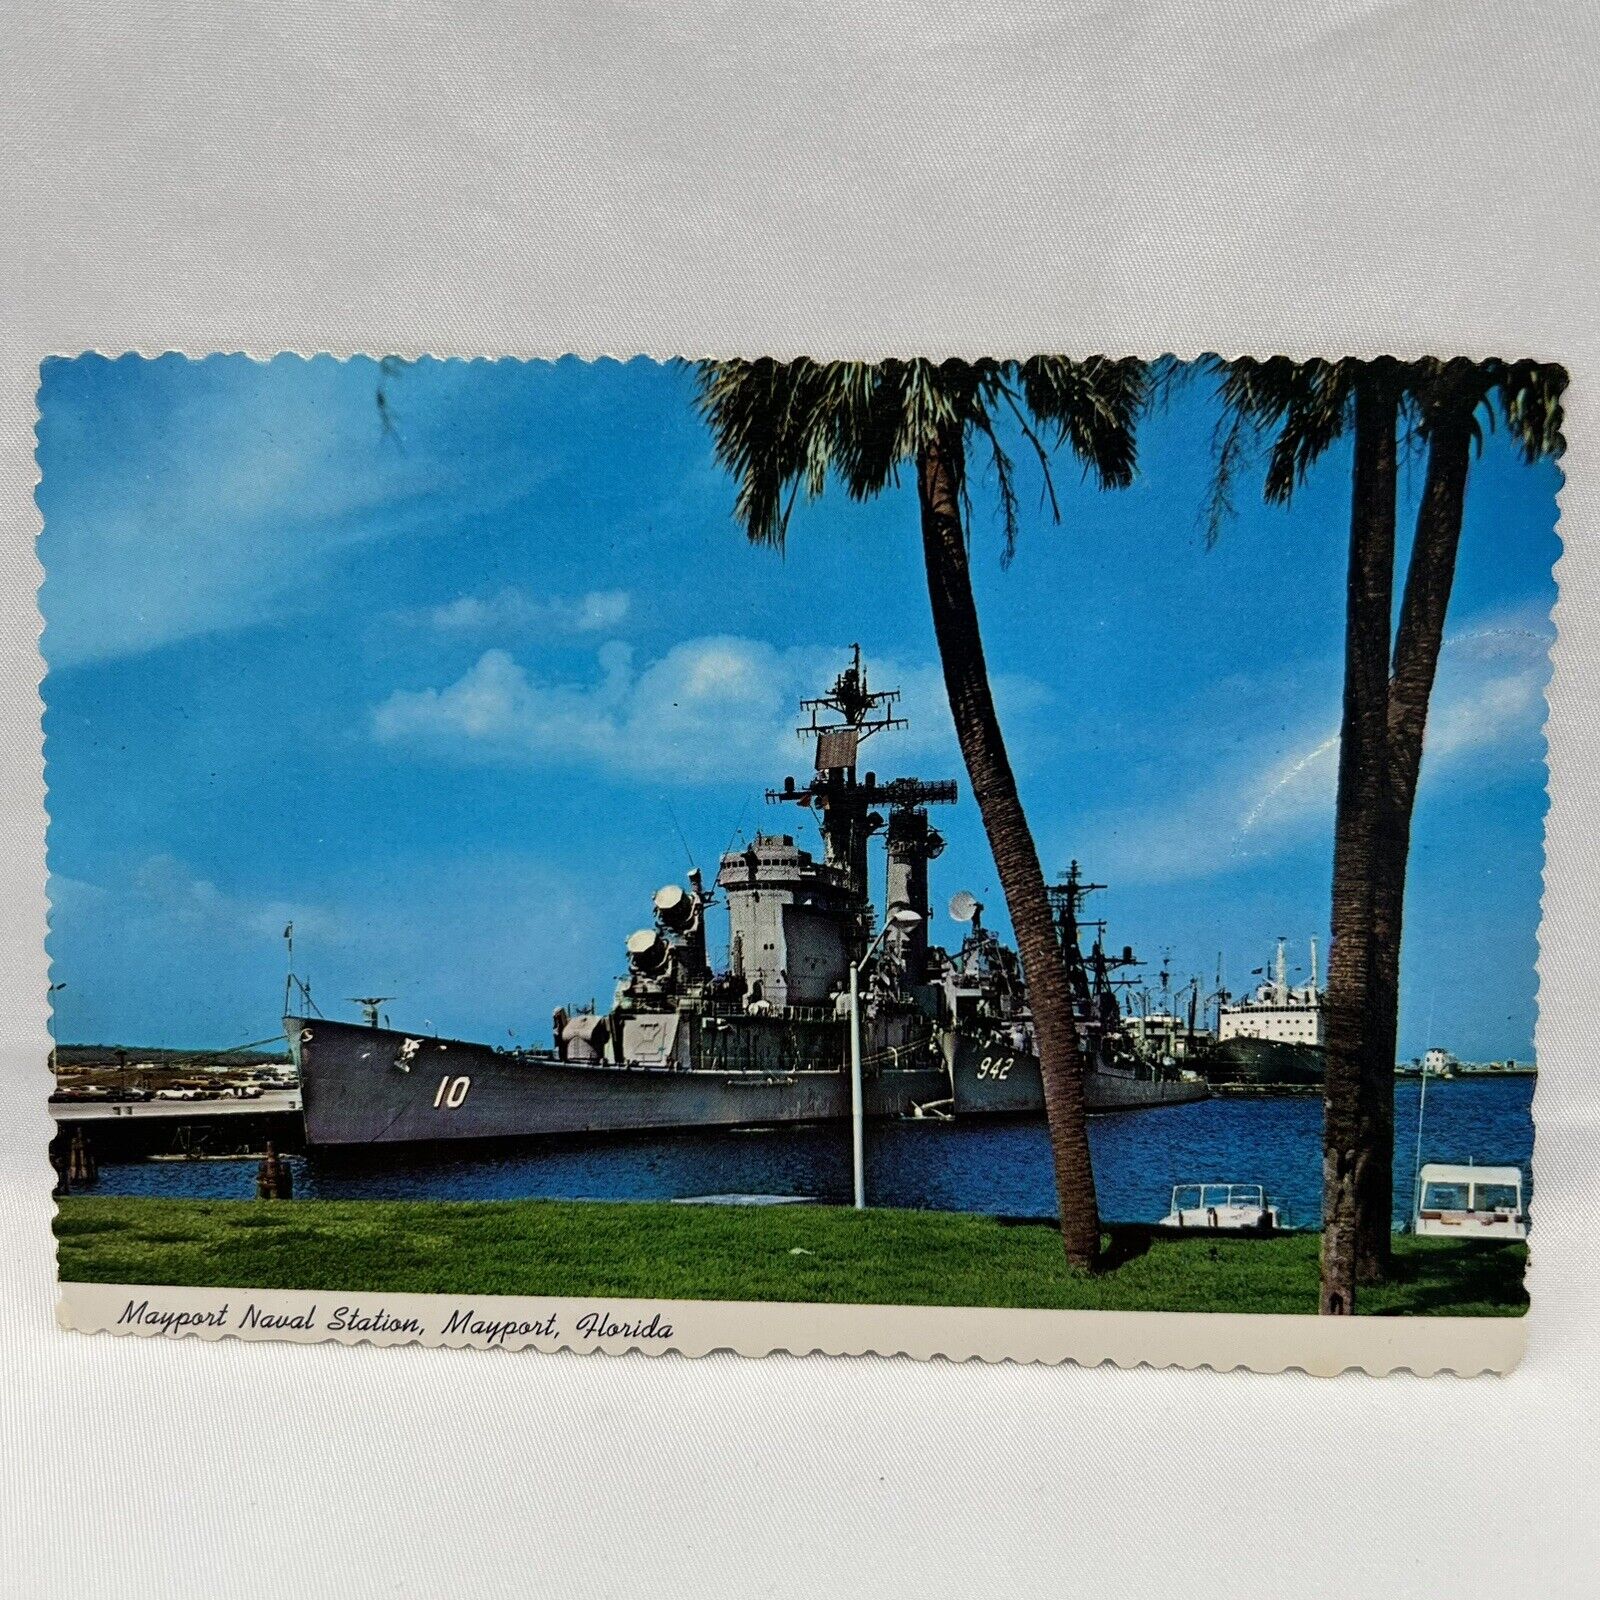 Mayport Naval Station Mayport Florida Postcard USS Albany CG 10 Guided Missile